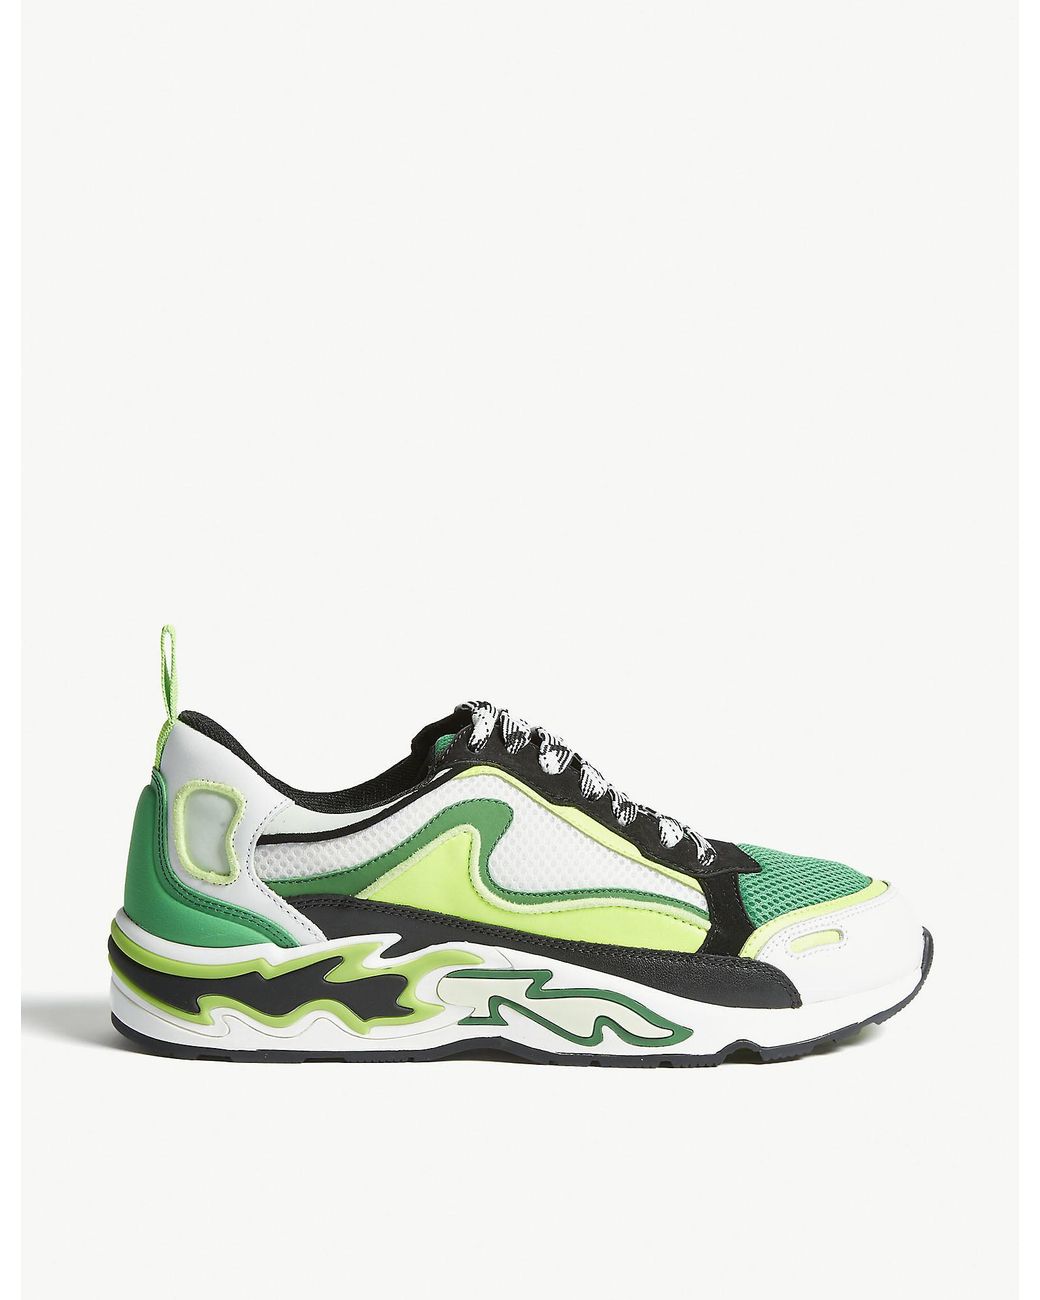 Sandro Women's Green Flame Sneakers